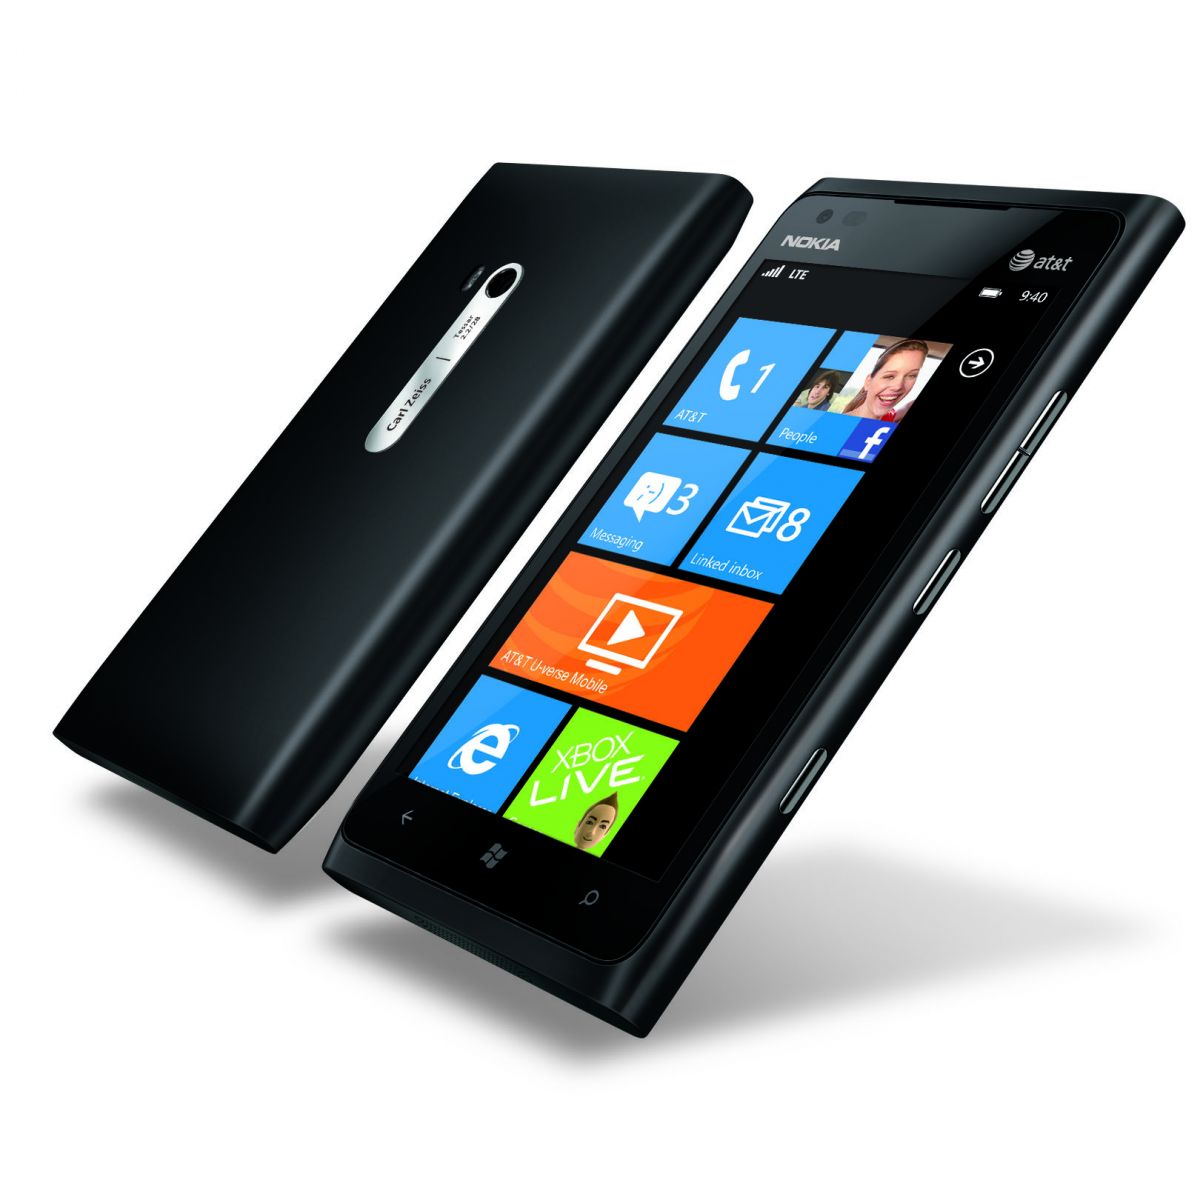 Nokia Lumia 900 Nokia Pureview 808 Black color Read inside  large image 0